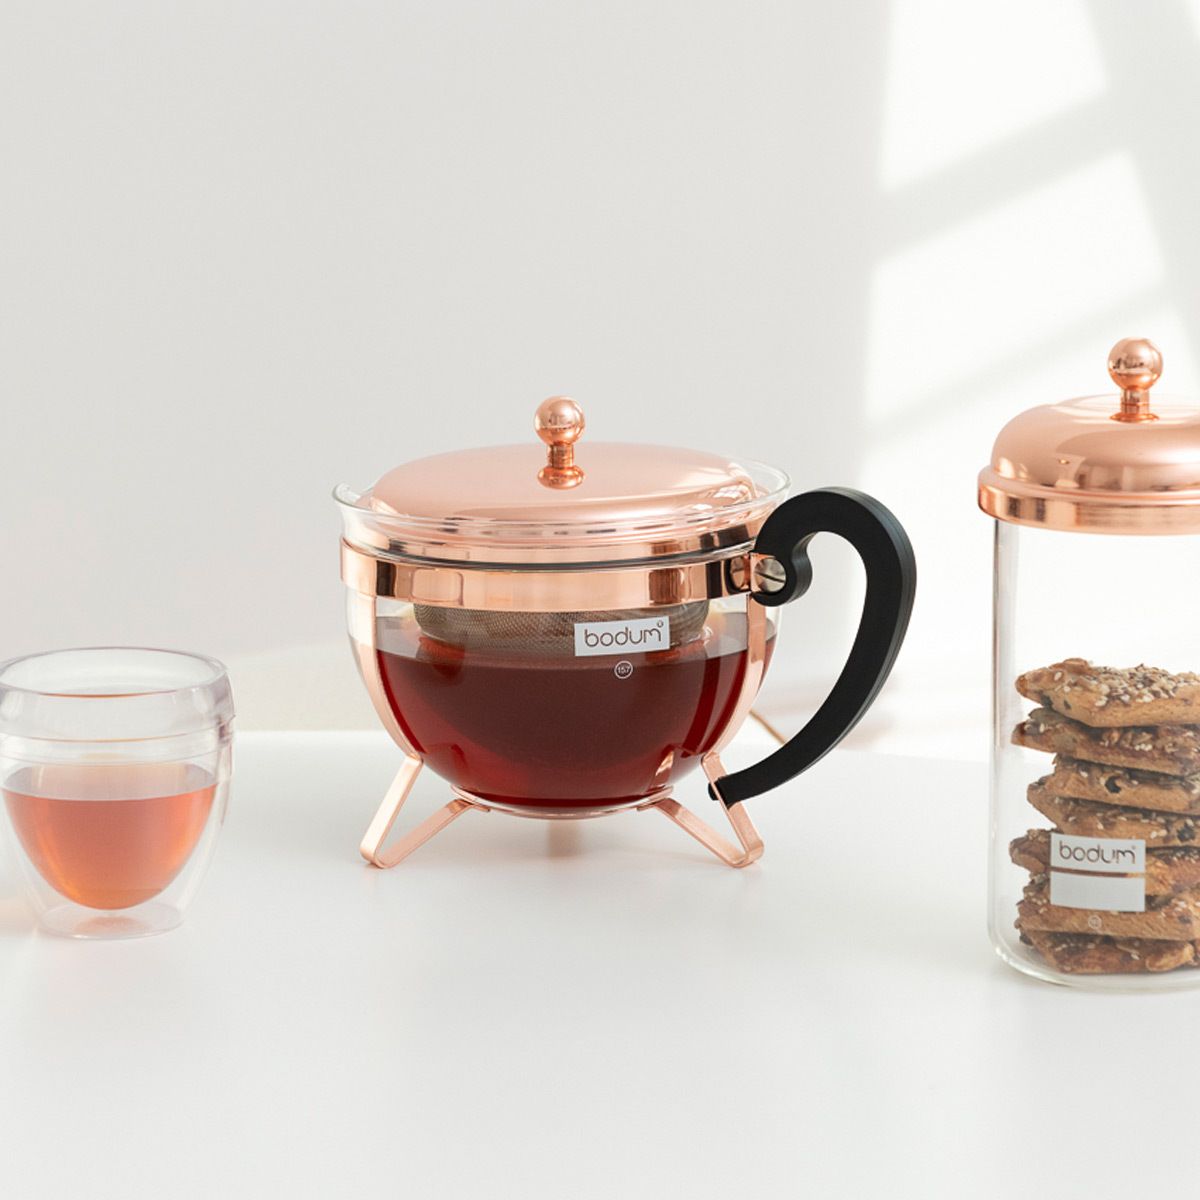 Bodum Chambord Tea Maker, Copper